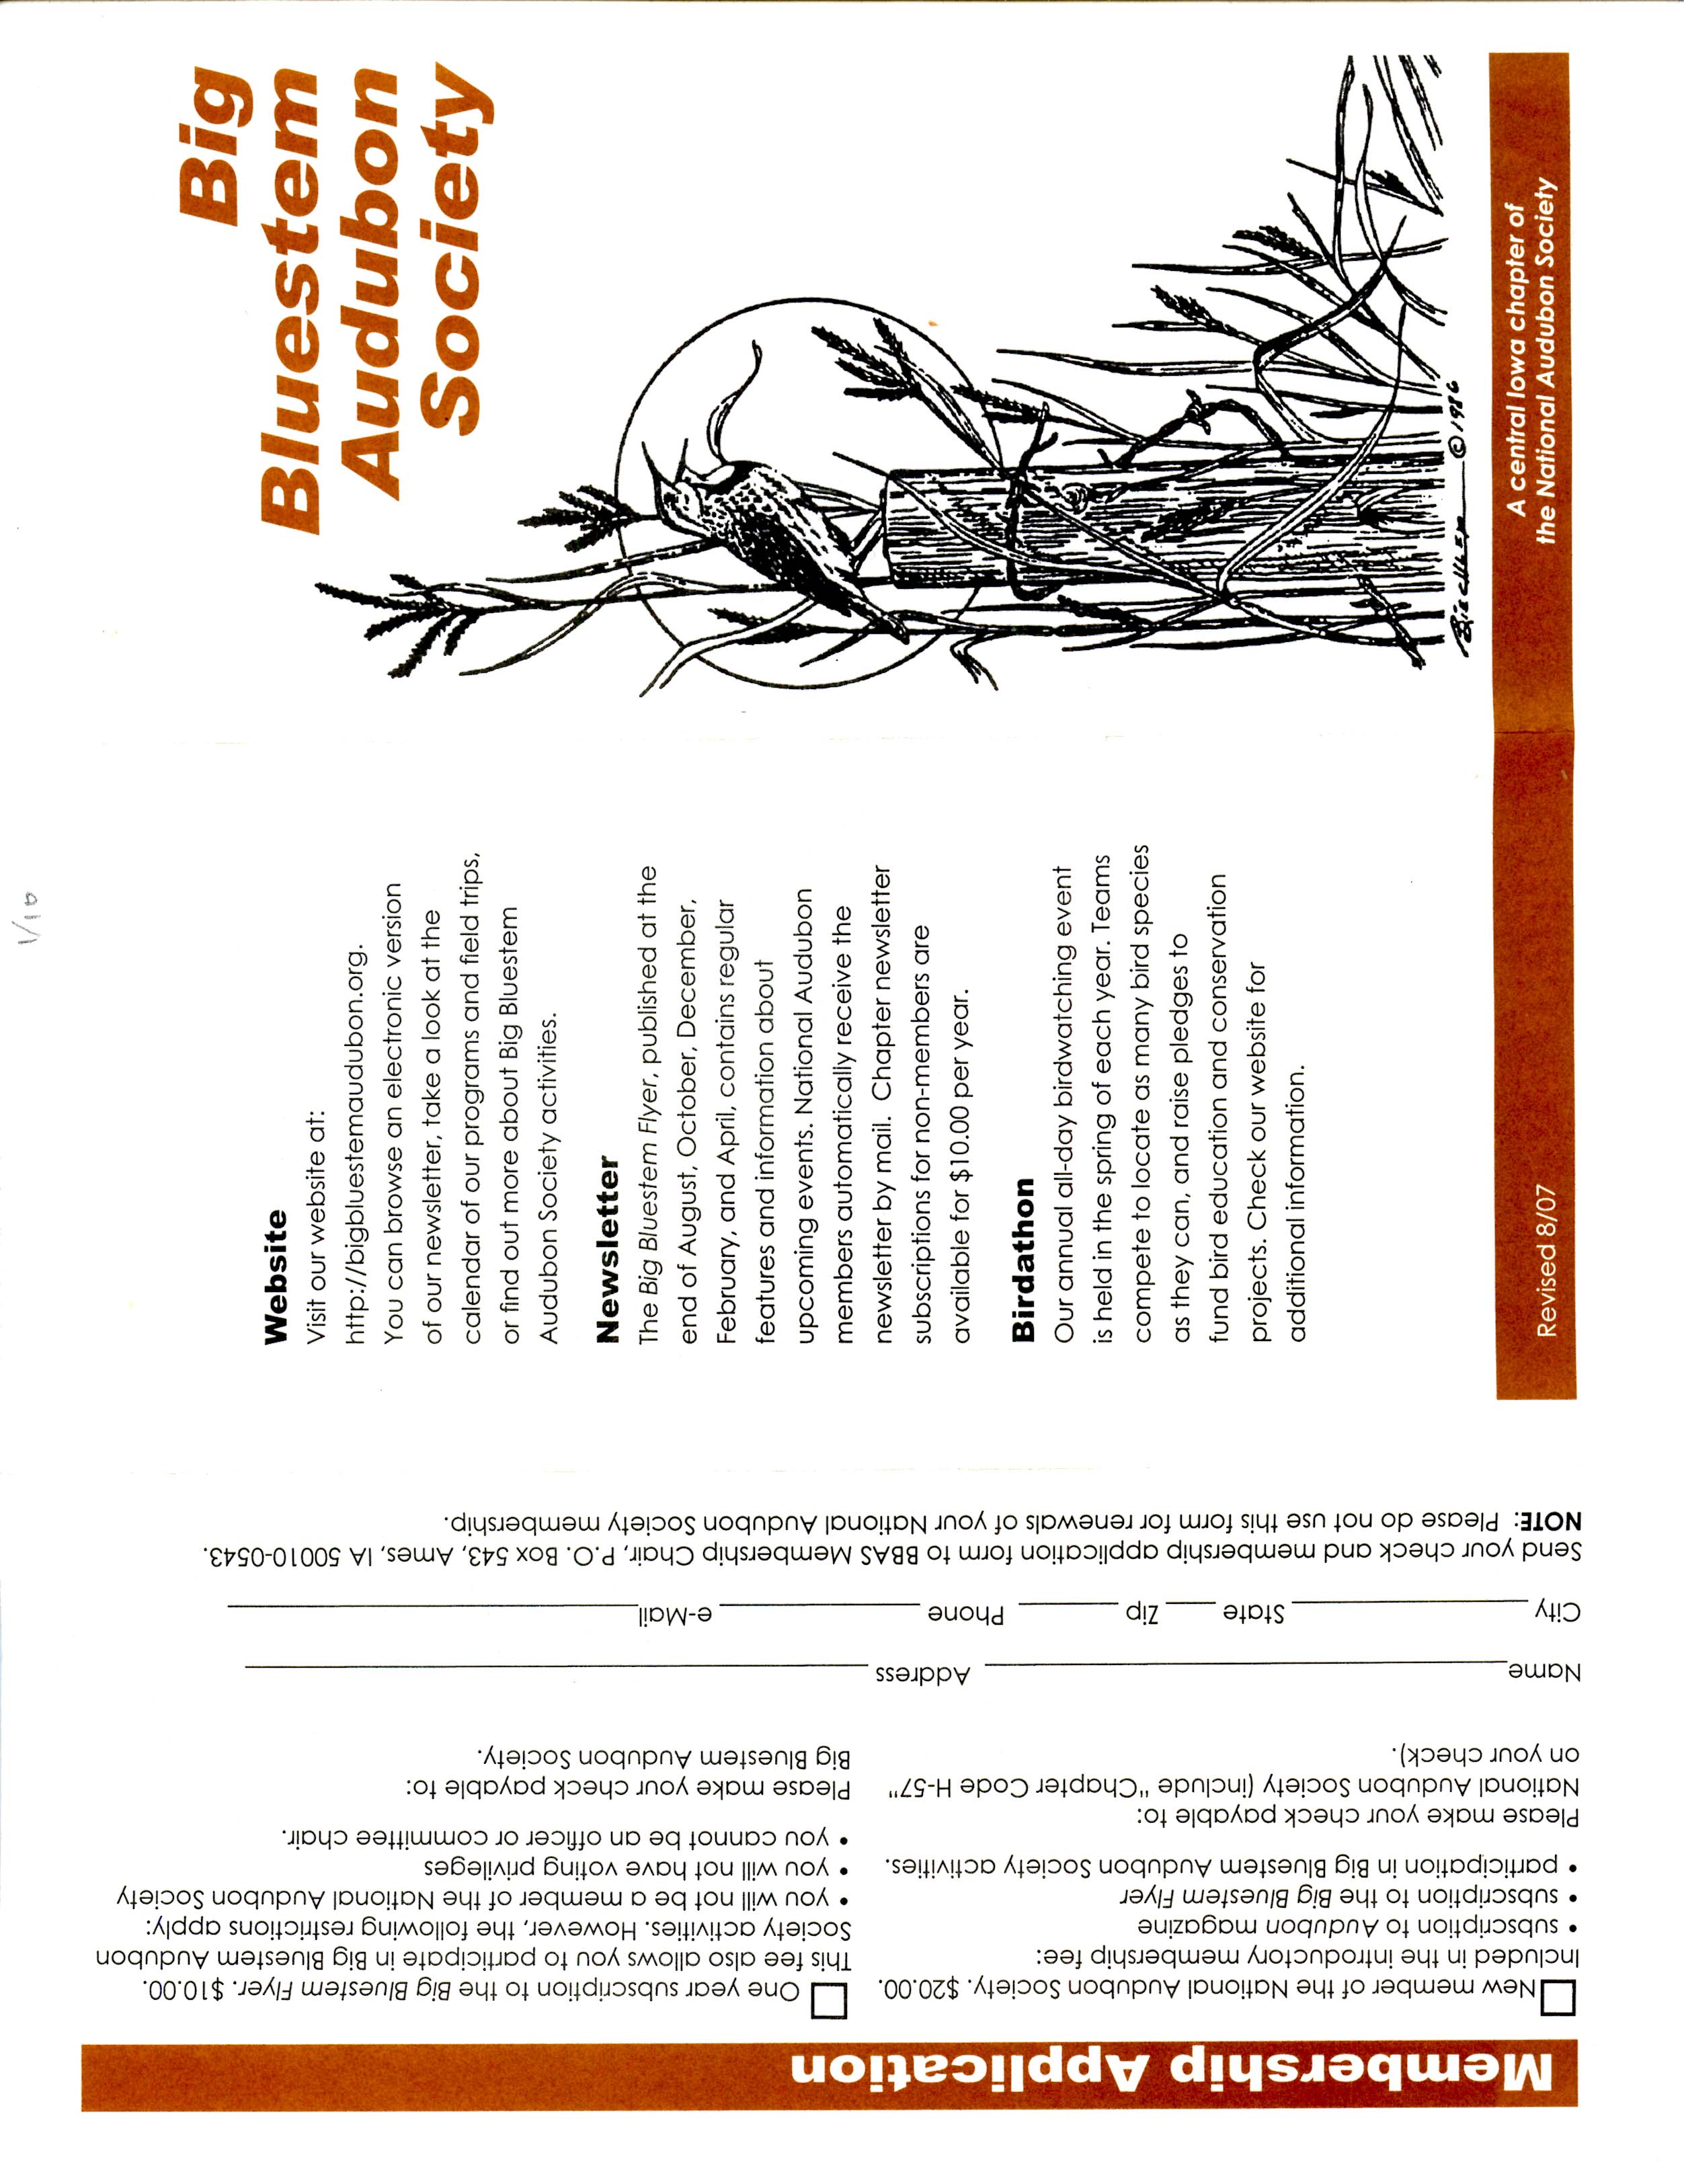 Big Bluestem Audubon Society brochure and membership application